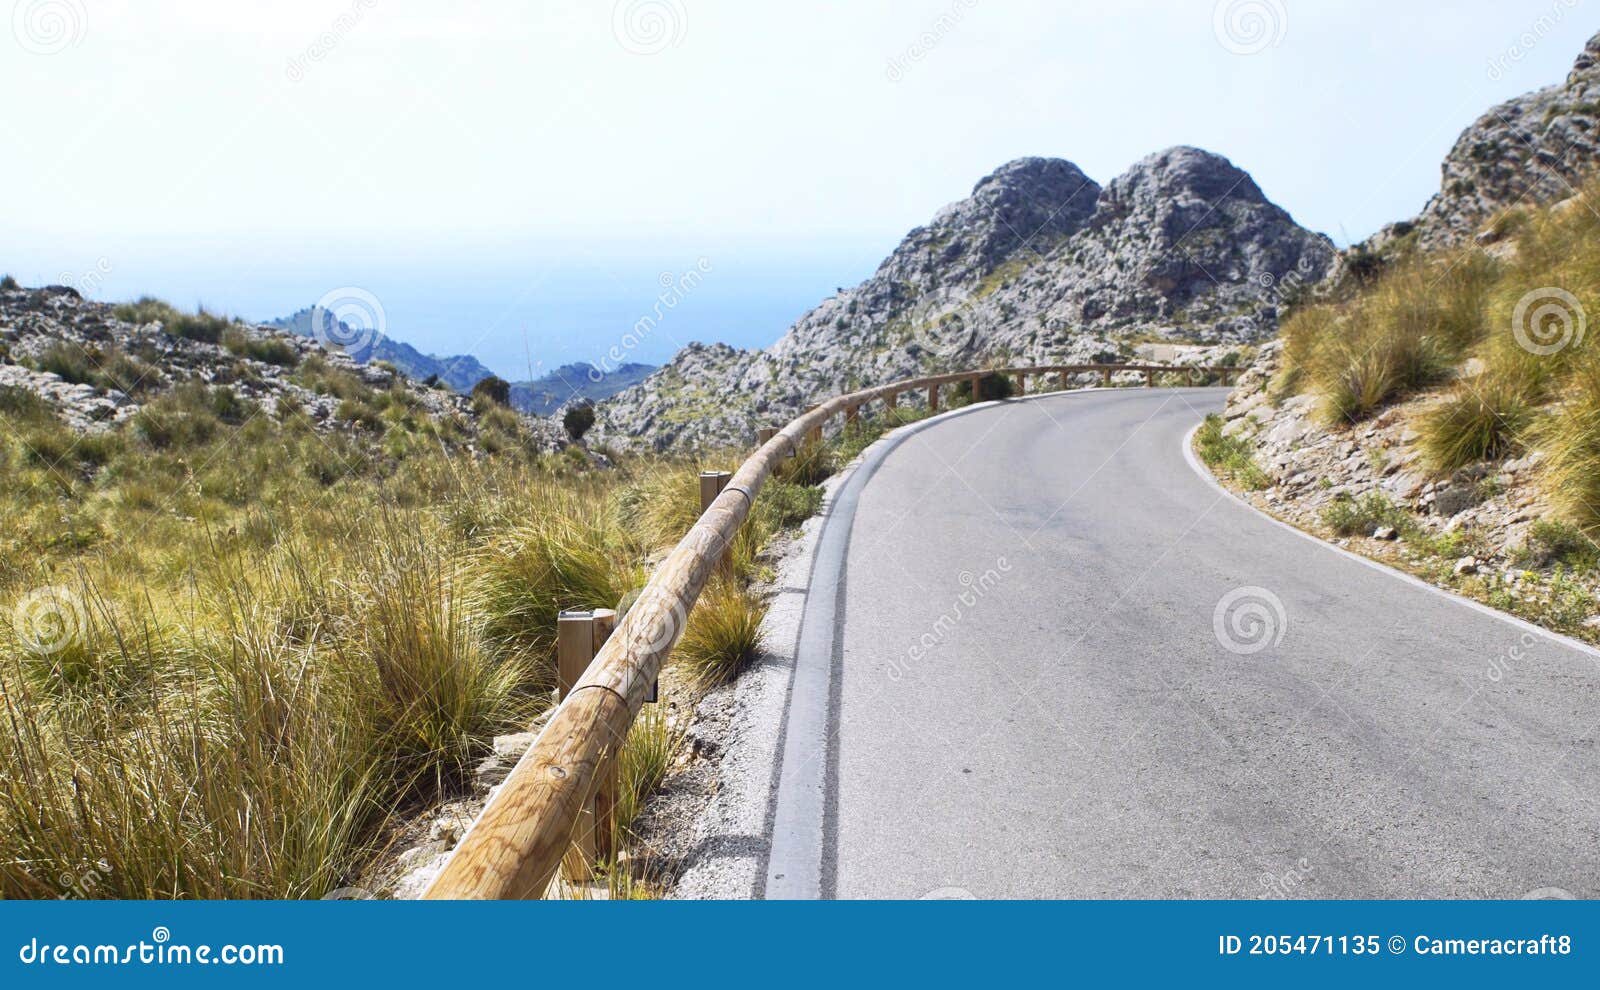 the knotted tie - nudo de corbata, mountain road leading to cap de formentor on mallorca, beleric islands, spain